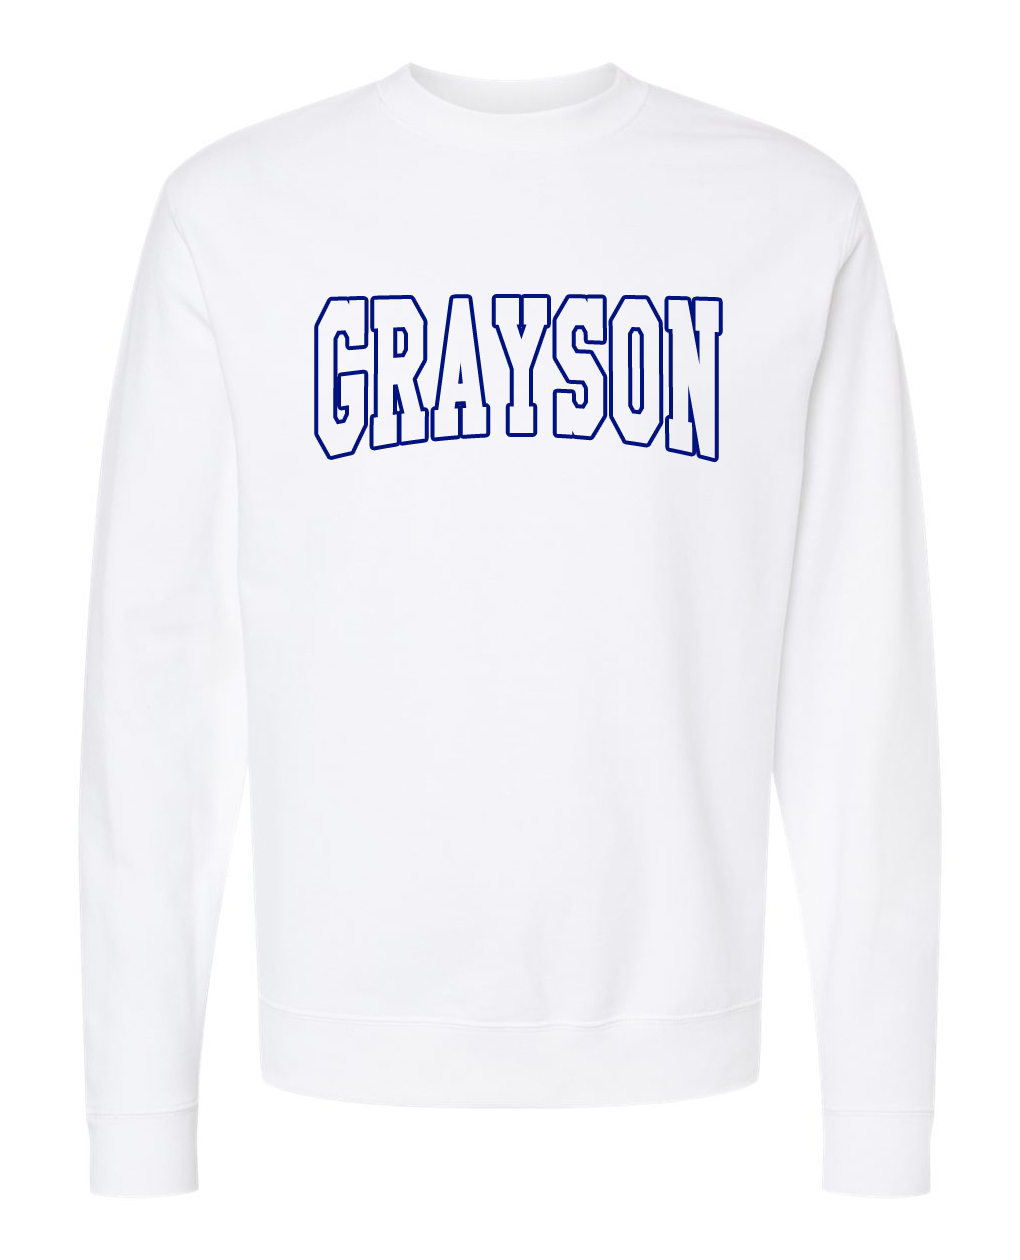 IES GRAYSON Crewneck Sweatshirt